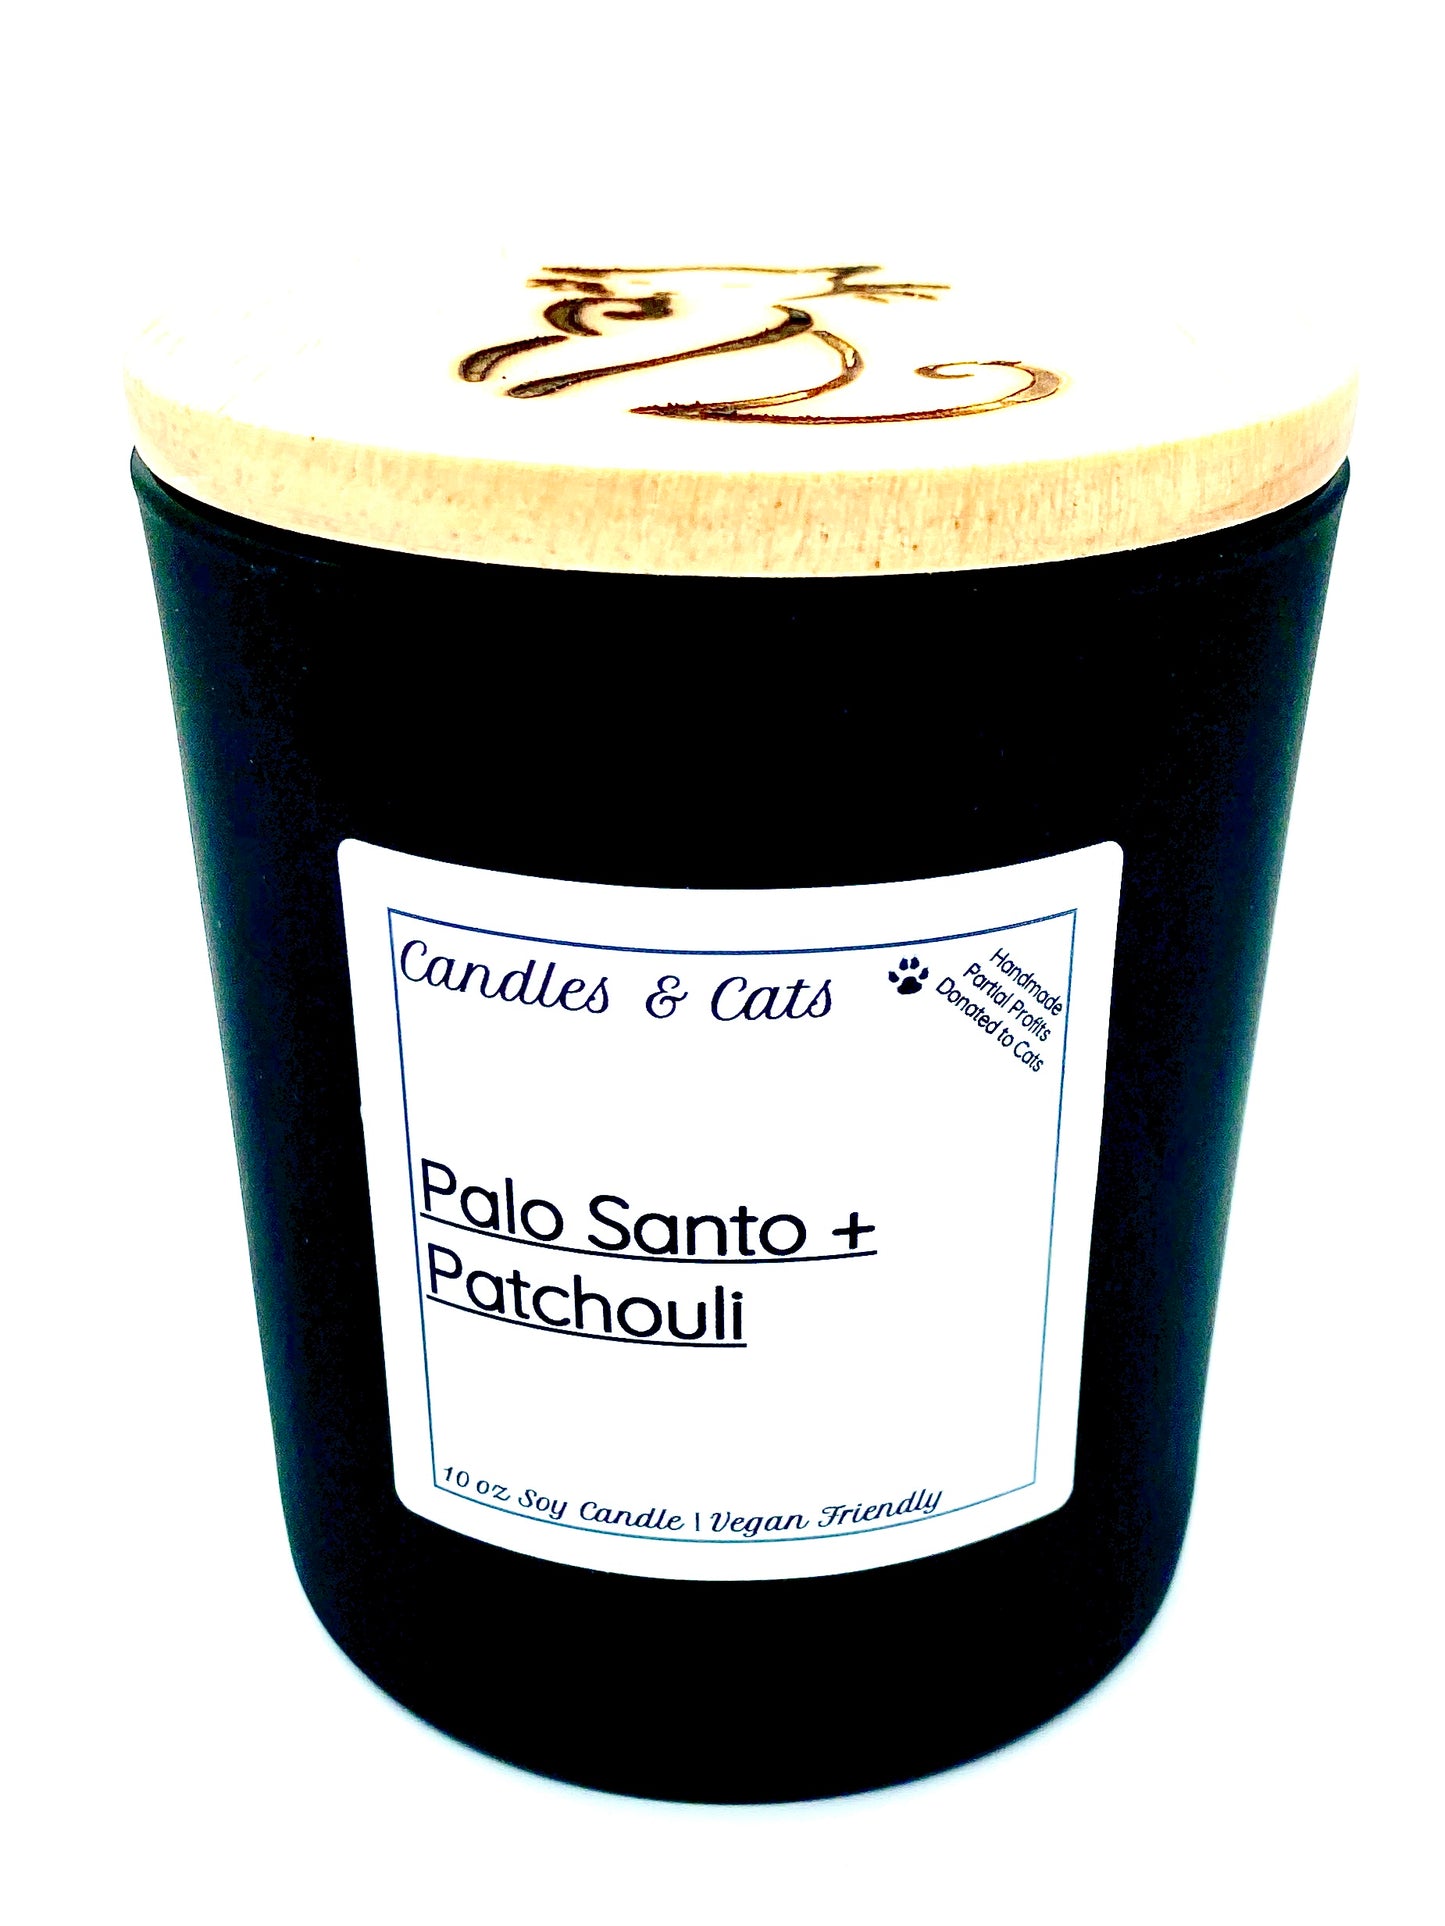 Palo Santo + Patchouli